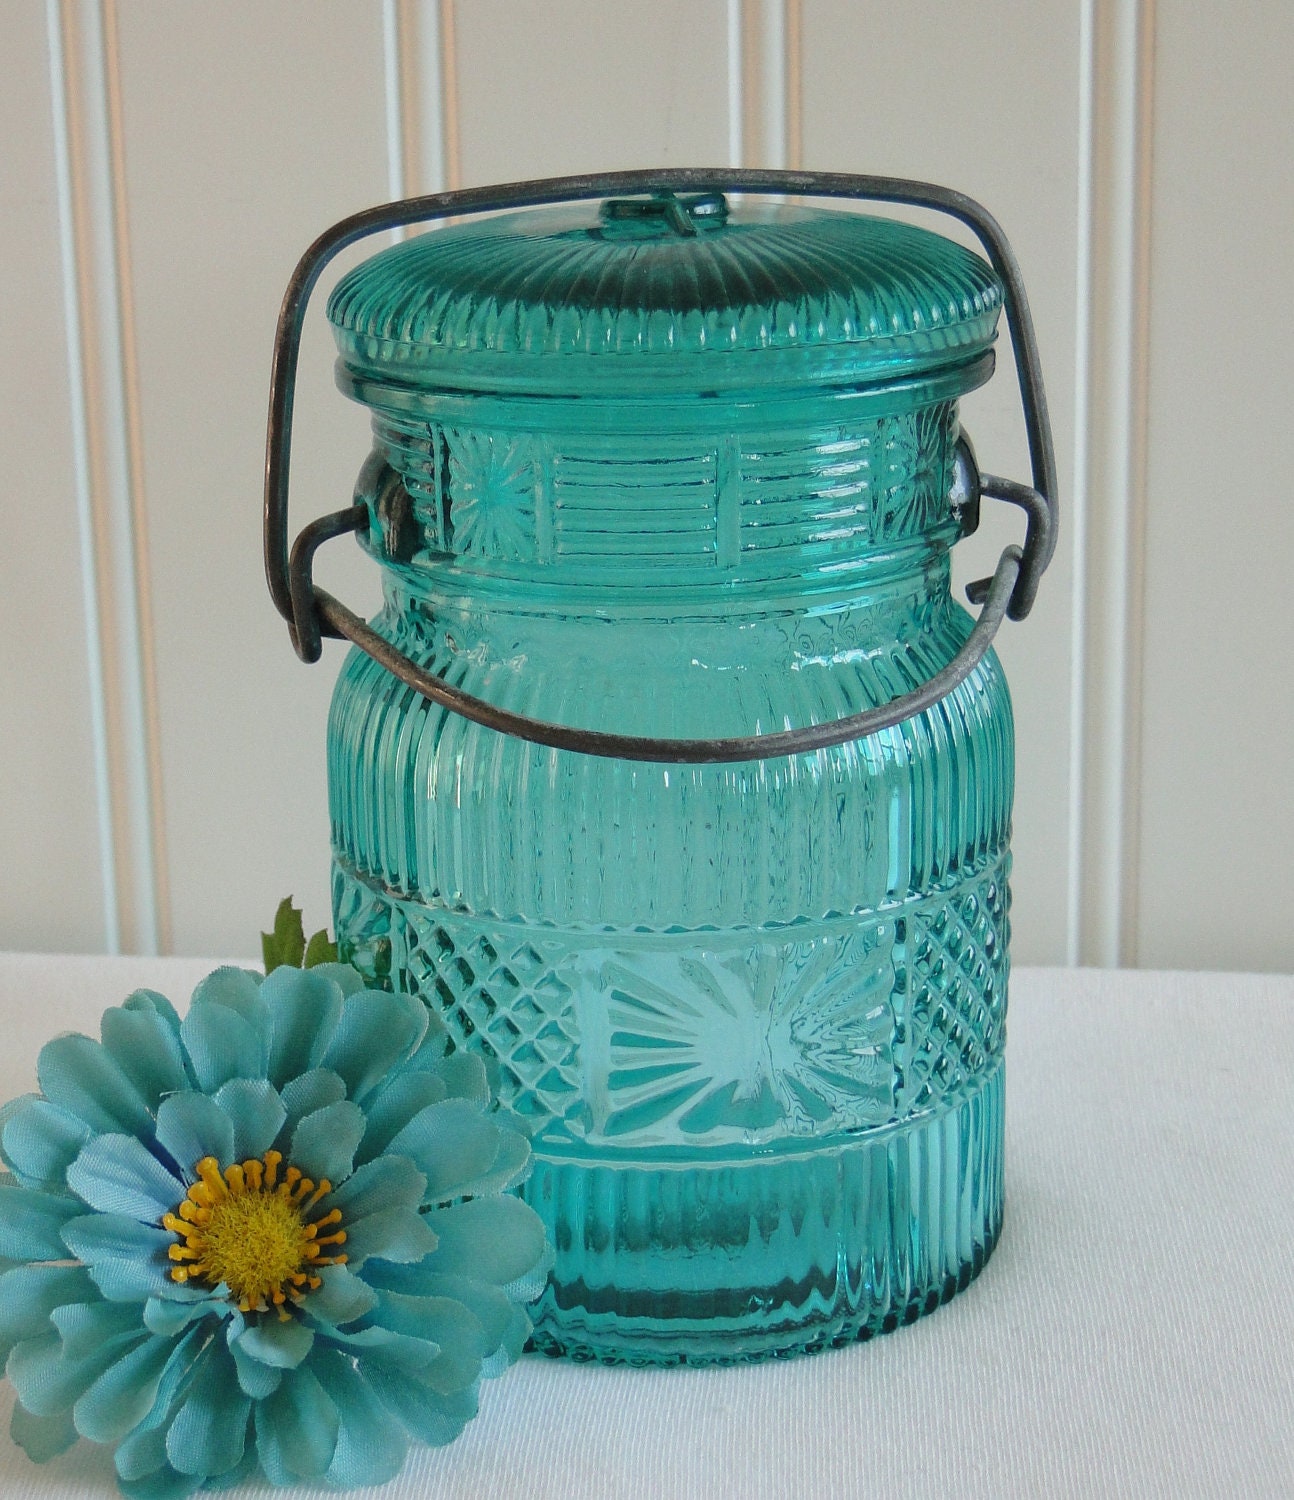 Avon Canning Jar Turquoise Teal Hatch lid vintage - LeadMeAway